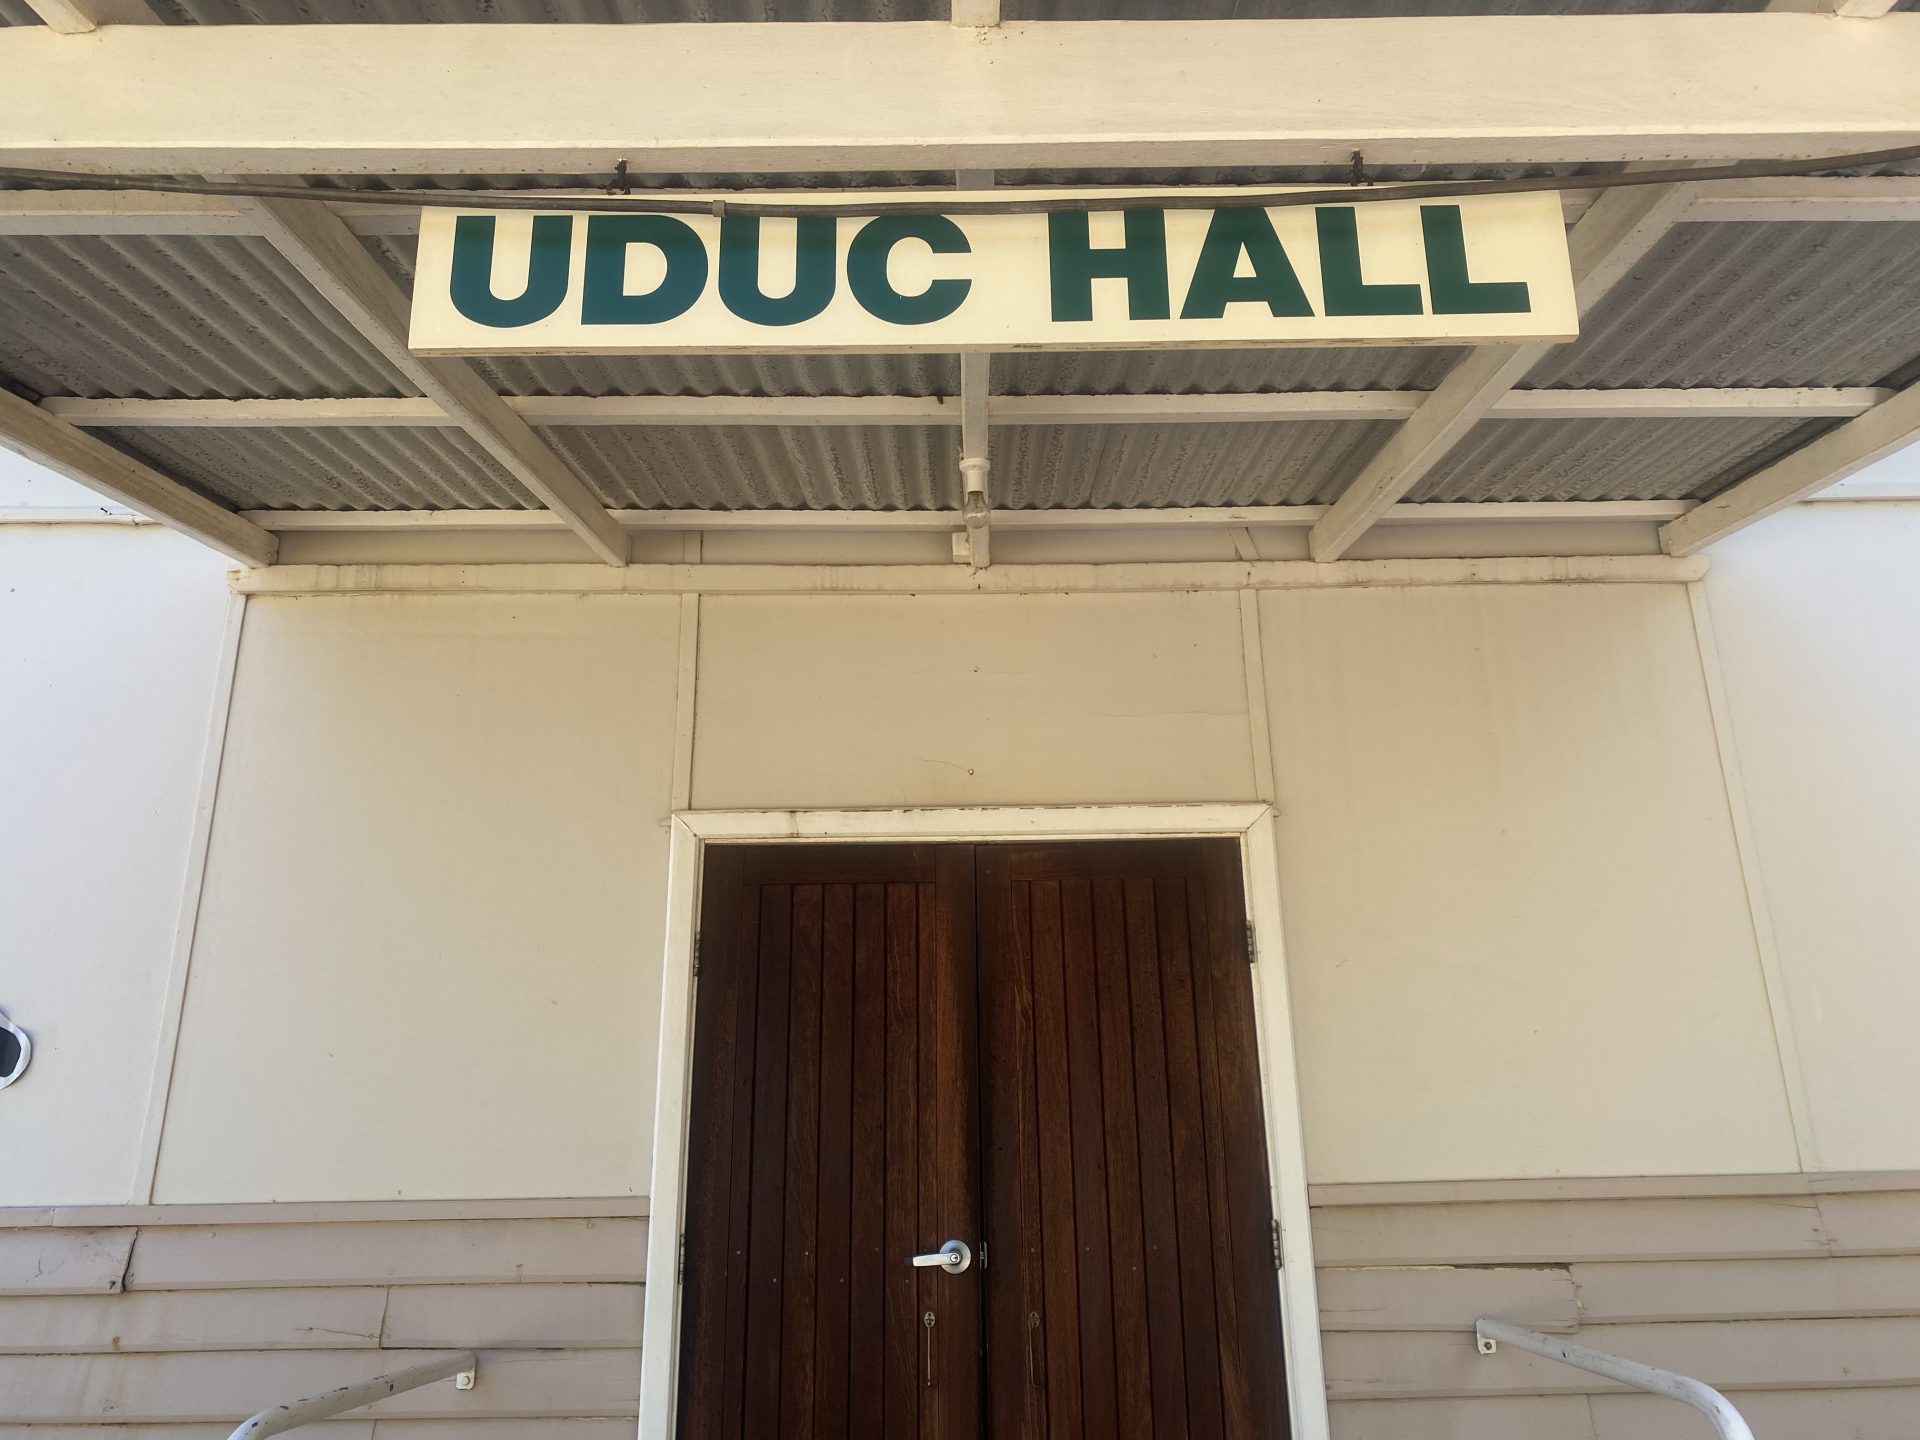 Uduc-Hall-Entrance-1920x1440.jpg